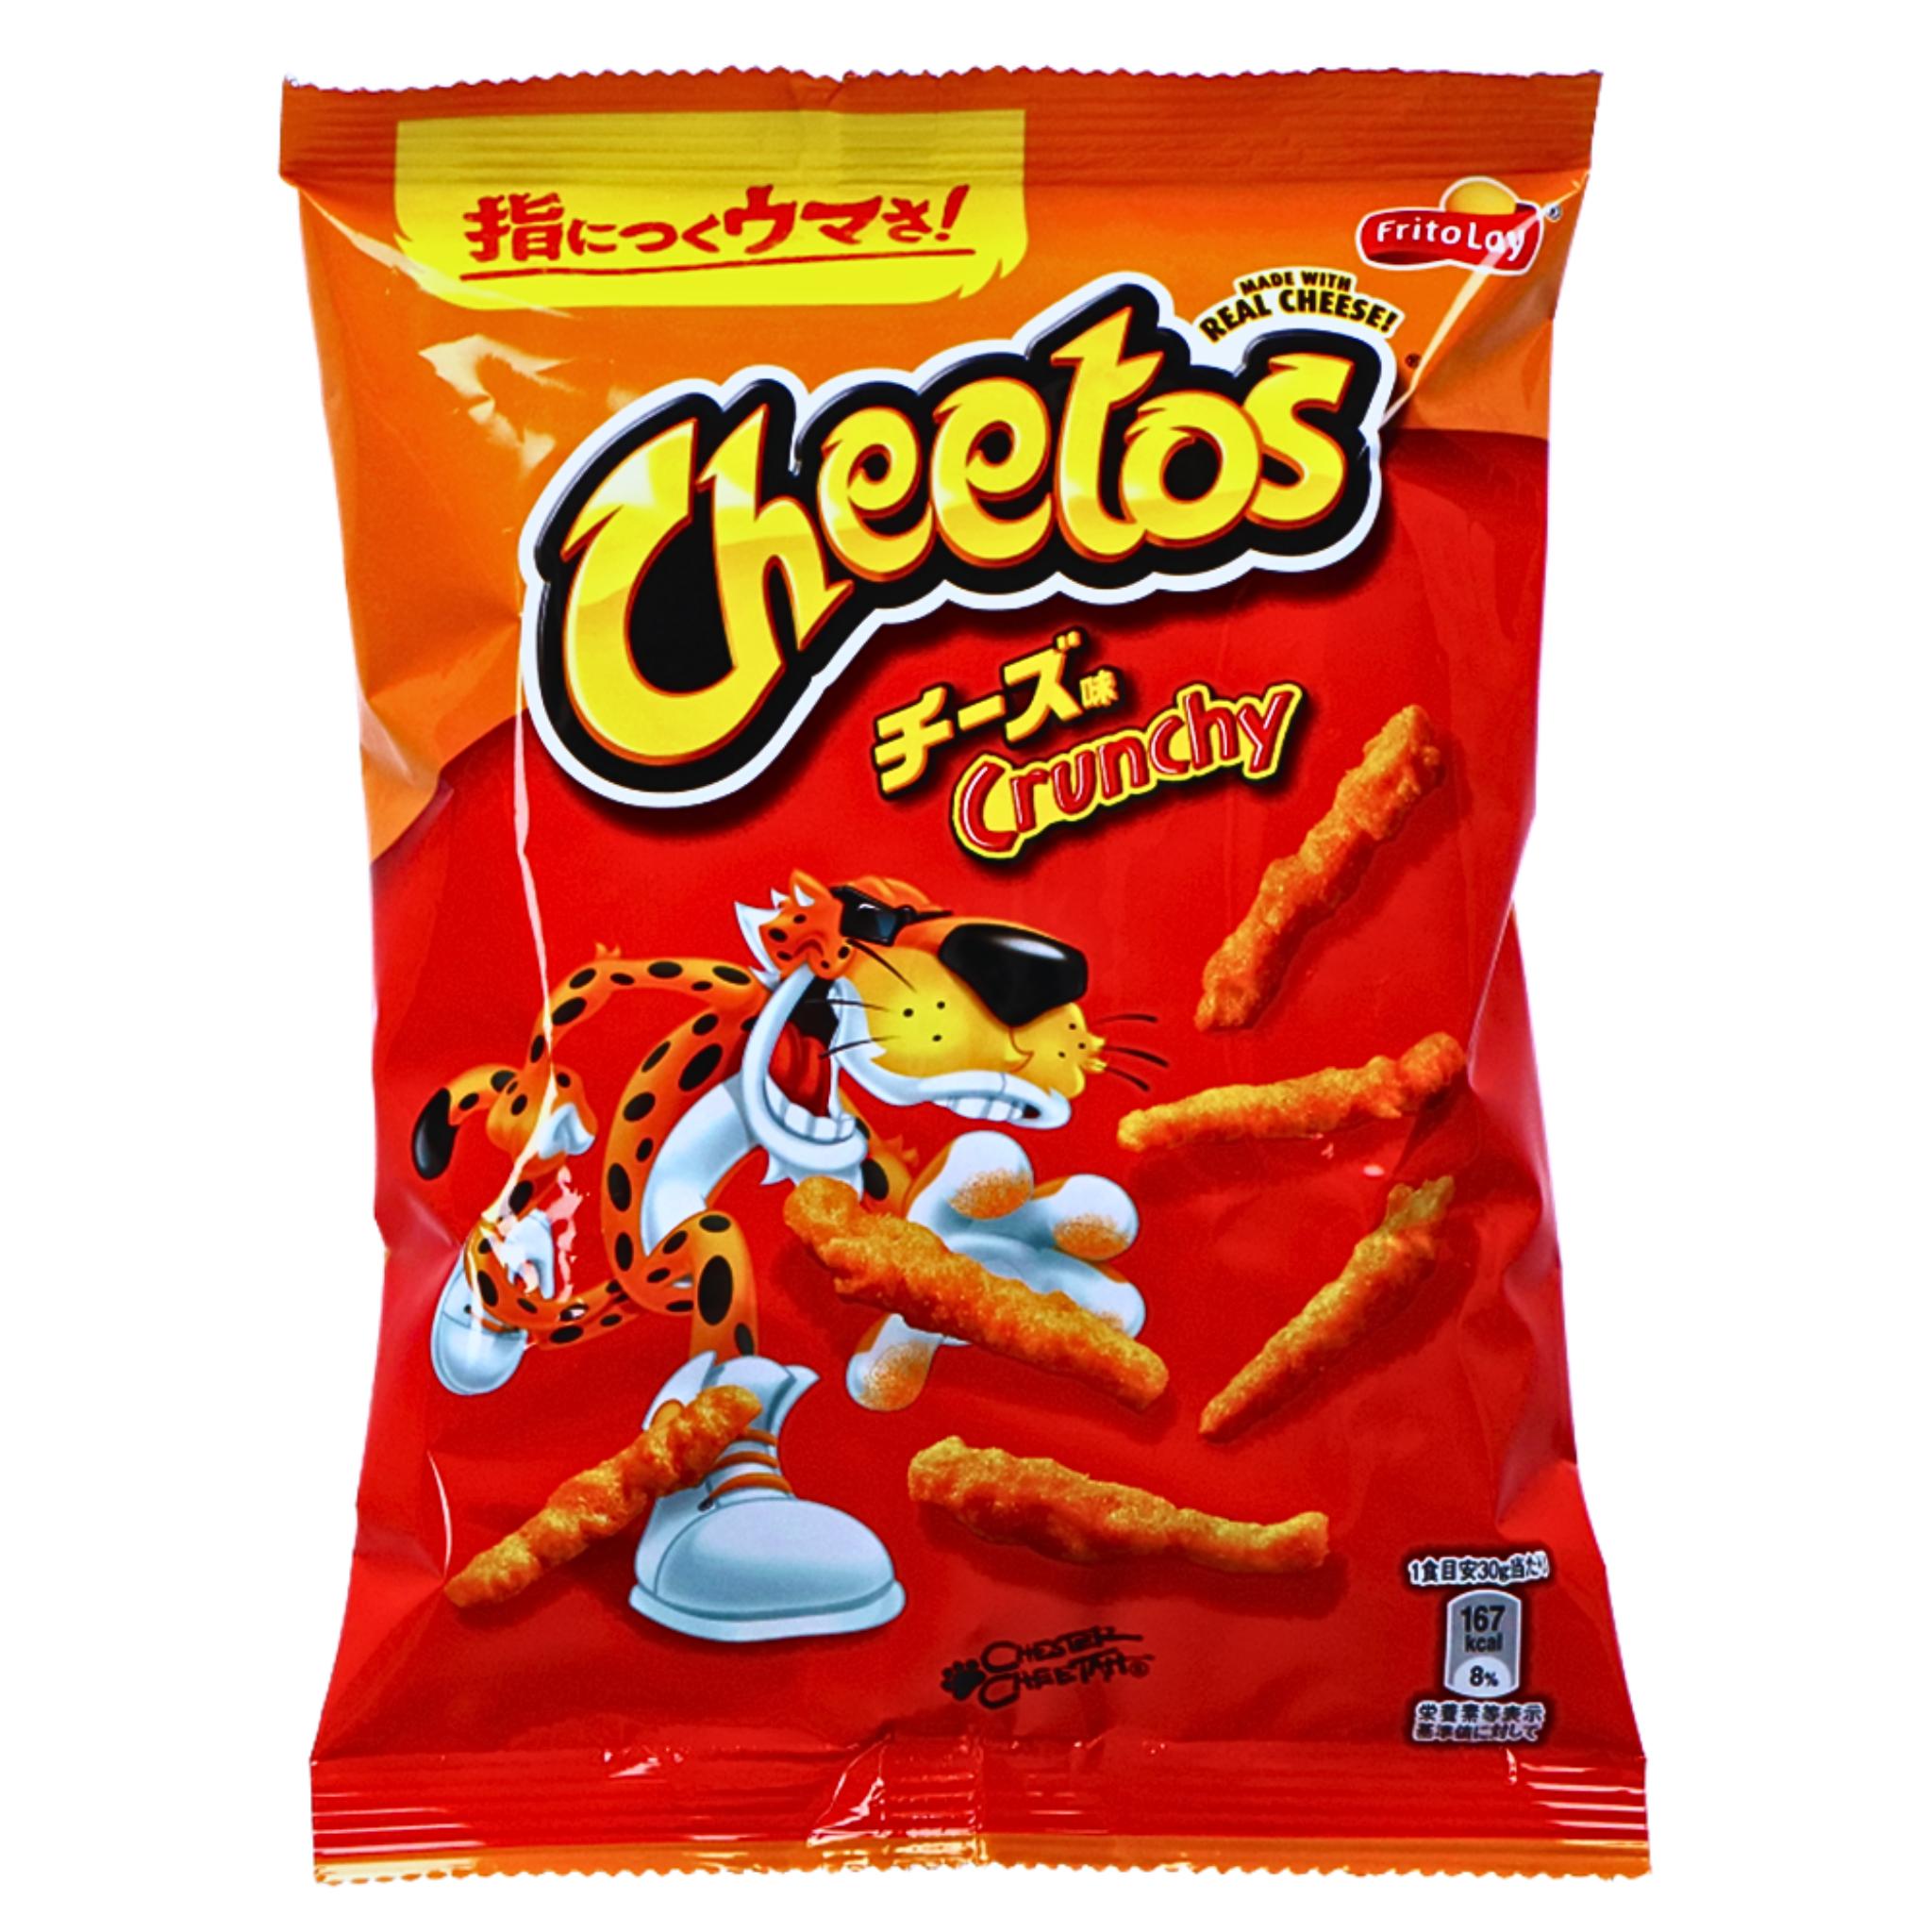 Cheetos Crunchy Cheese - 75g (JAPANESE)